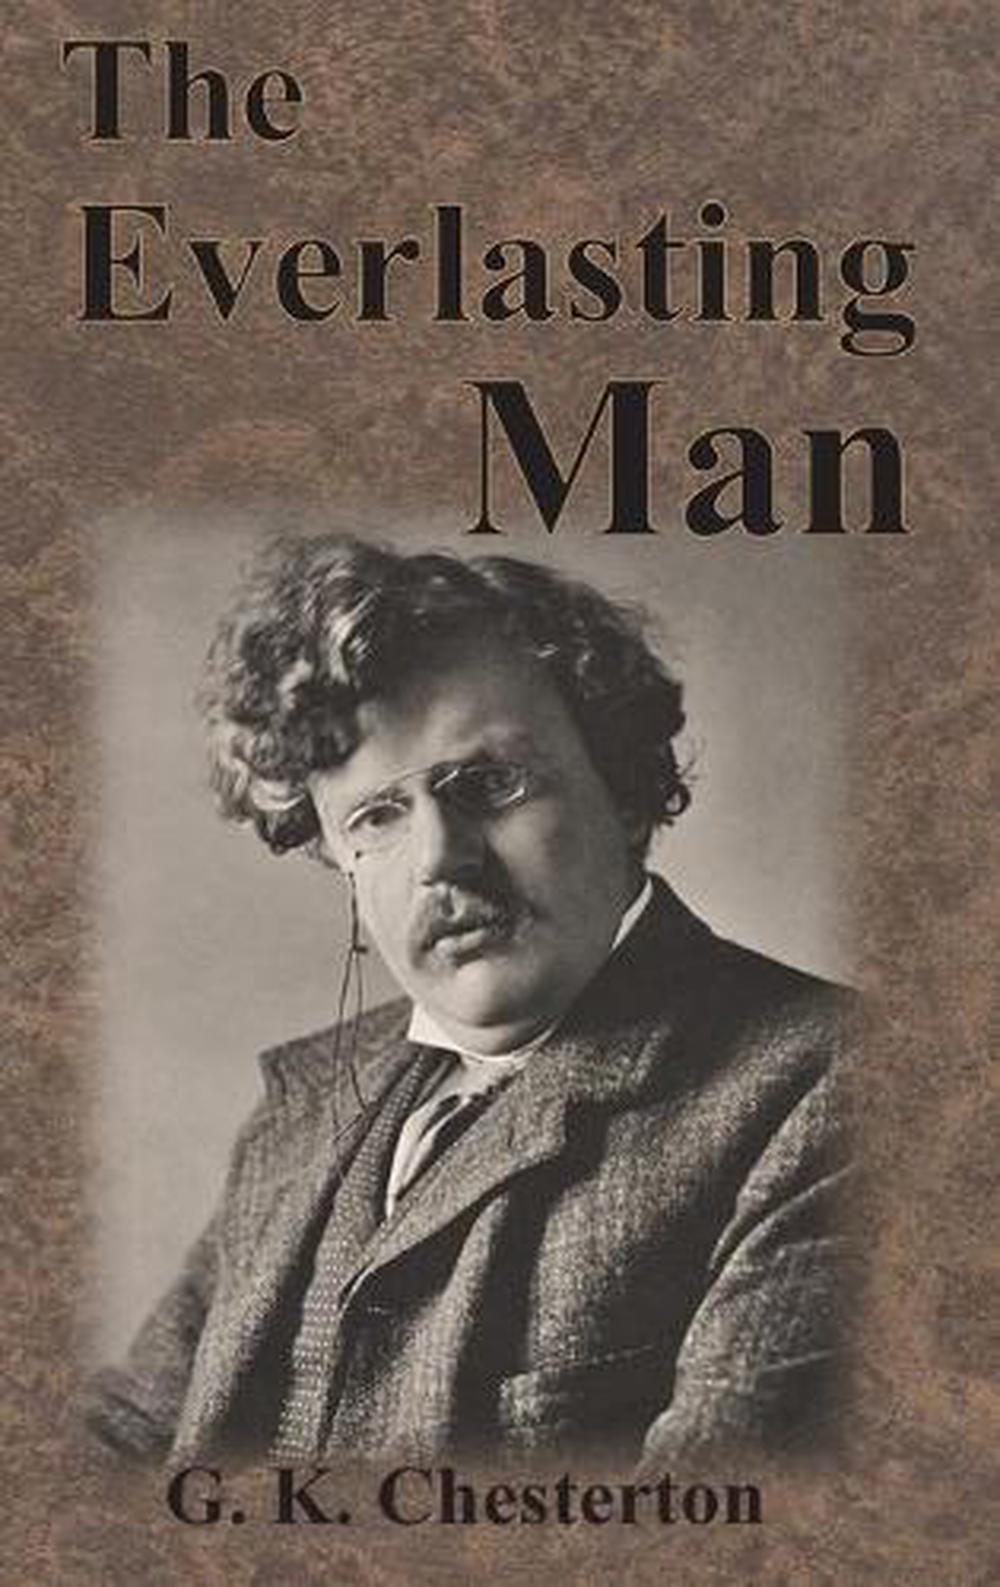 the everlasting man book